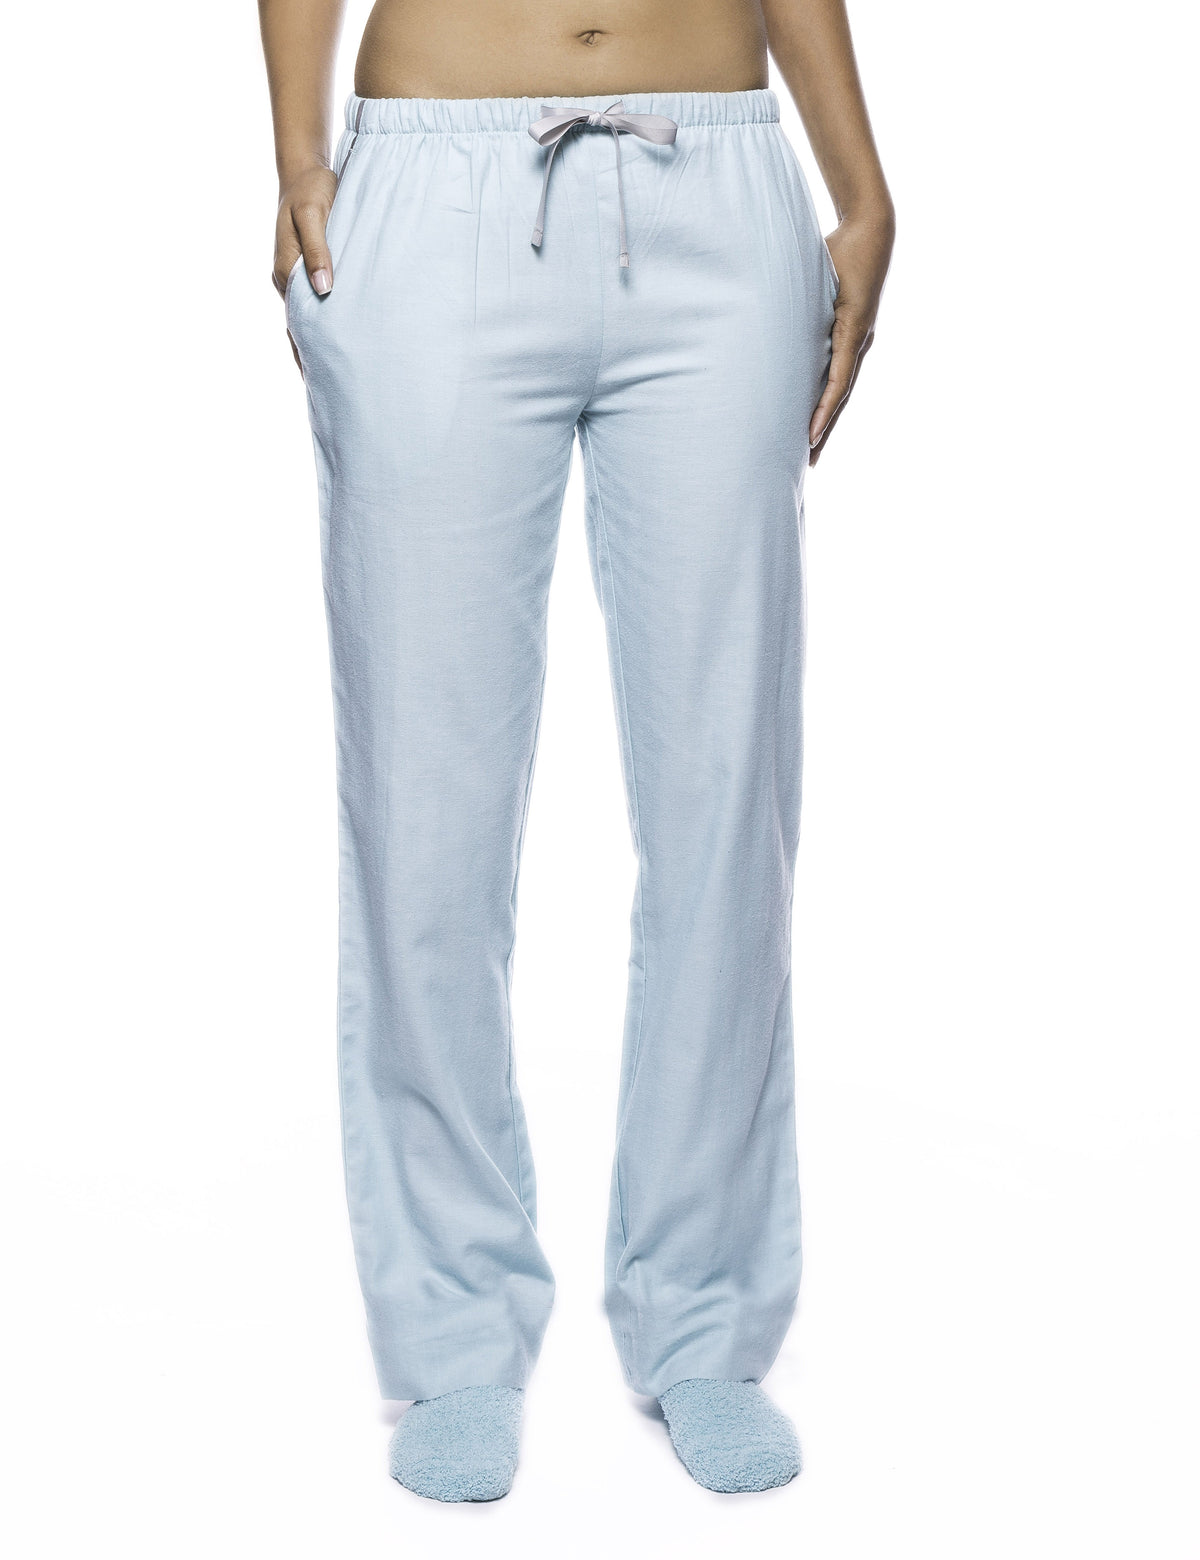 Wholesale Womens Pajama Pants – Preston Outlet Store